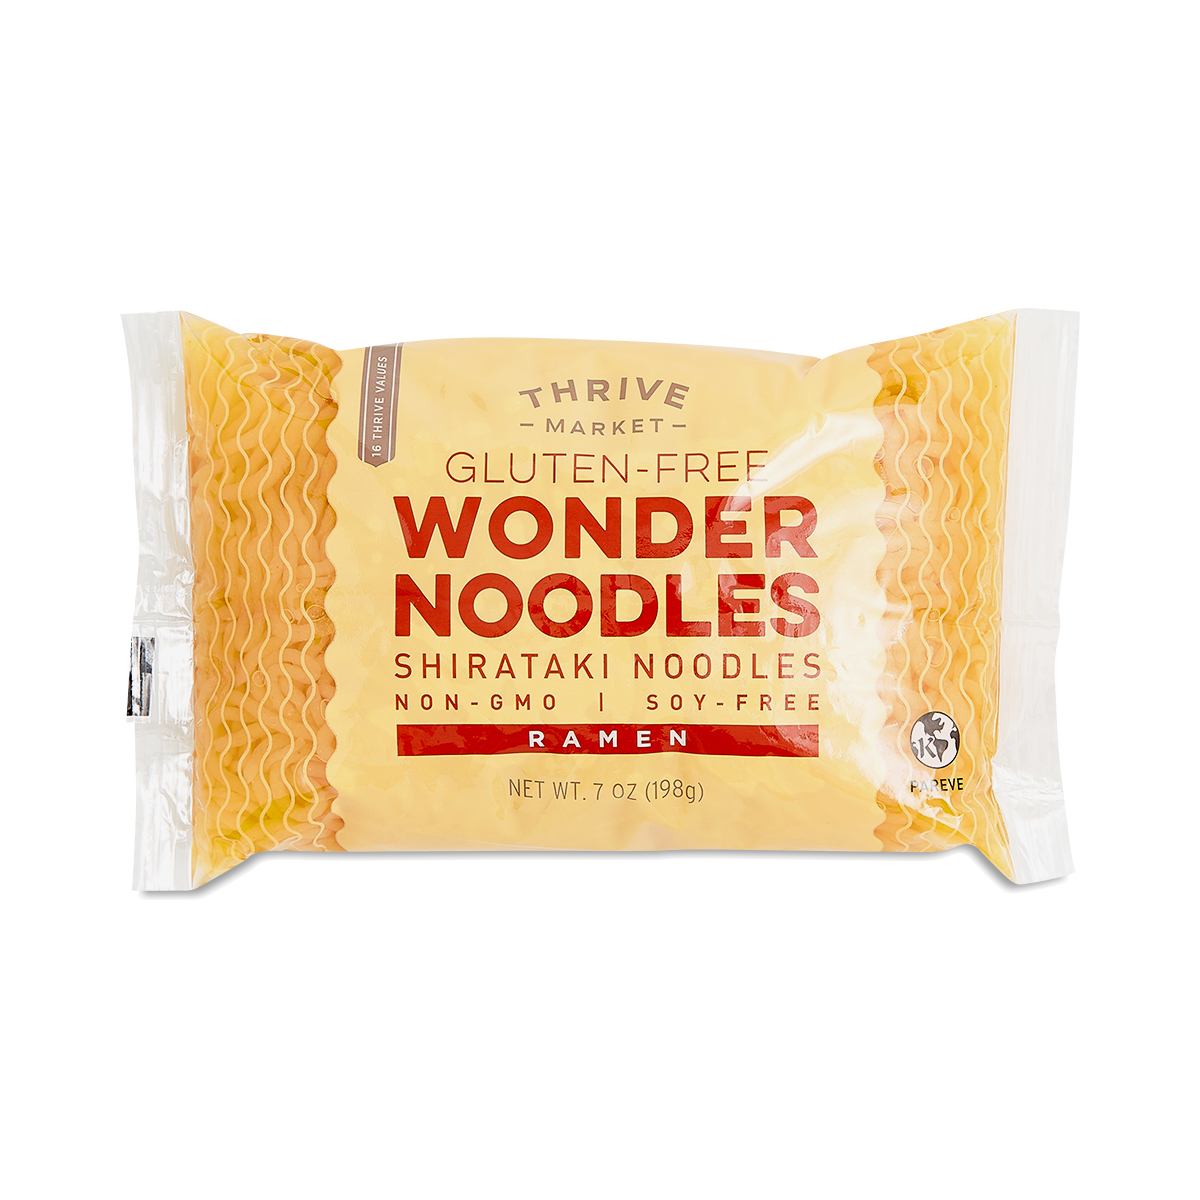 Thrive Market Wonder Shirataki Noodle, Ramen 7 oz bag